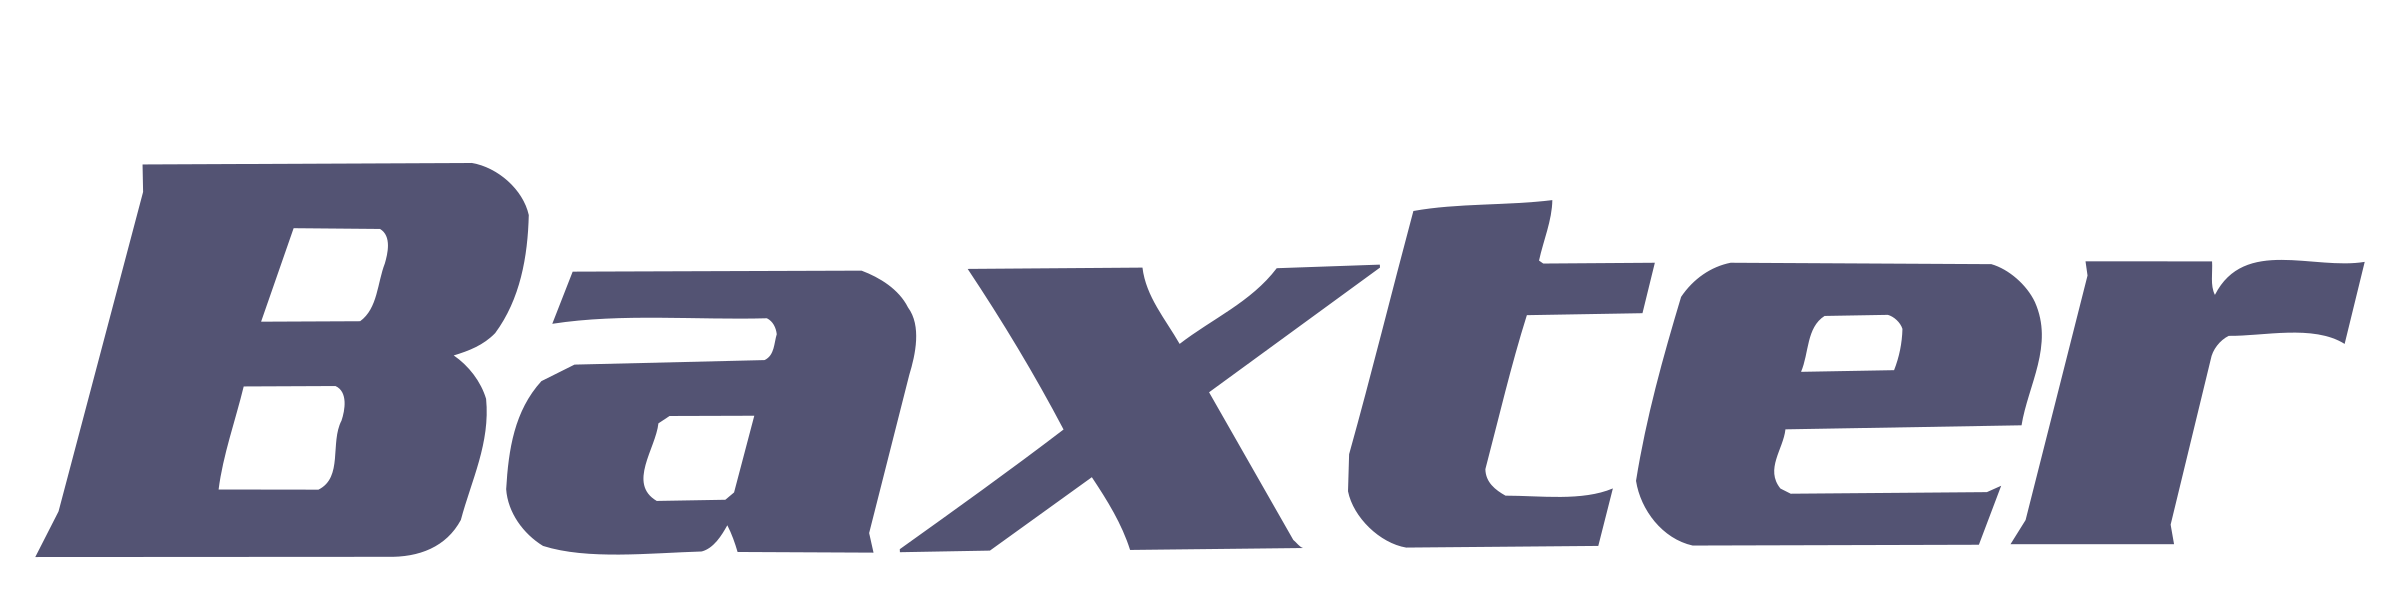 baxter-logo-png-transparent